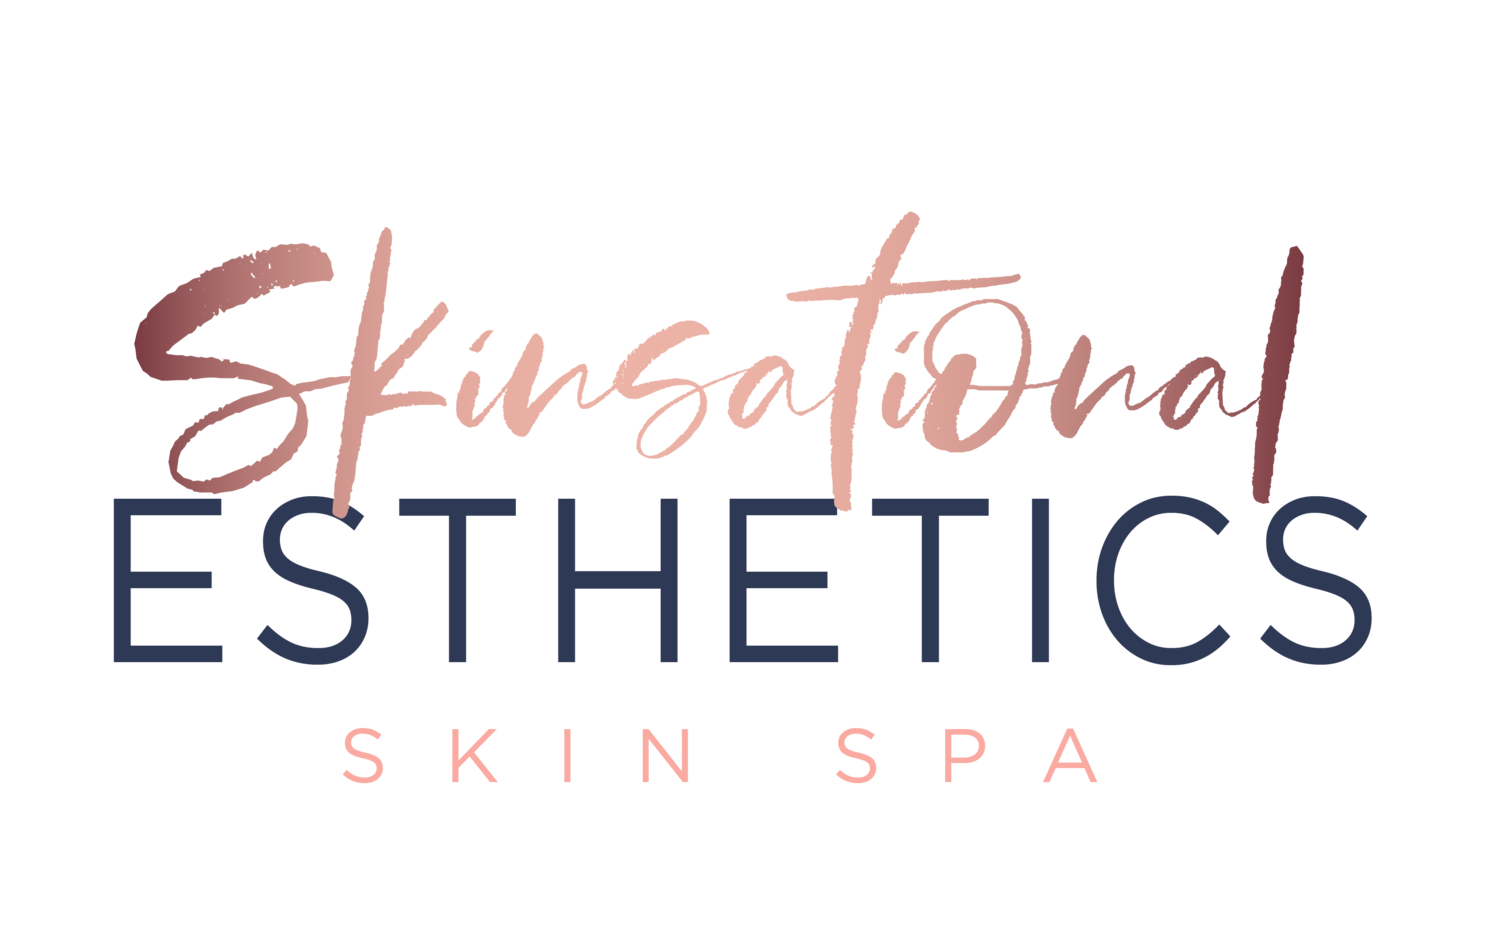 Skinsational Esthetics Skin Spa